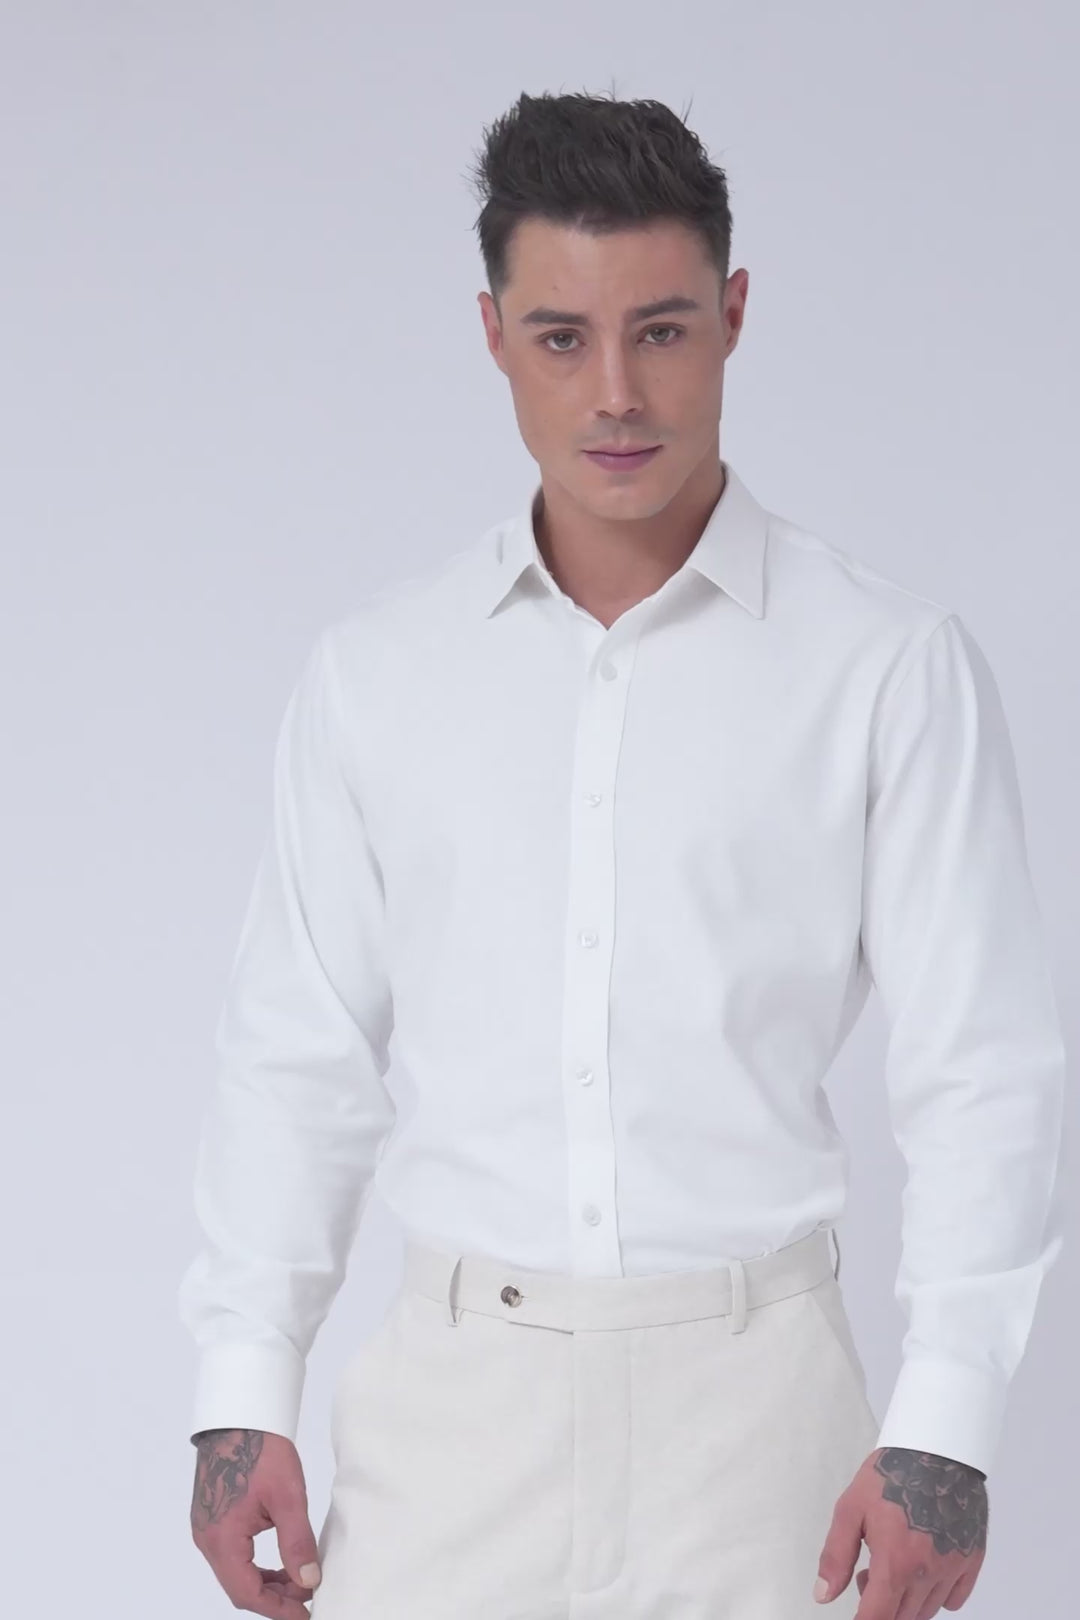 White Linen Blend Shirt